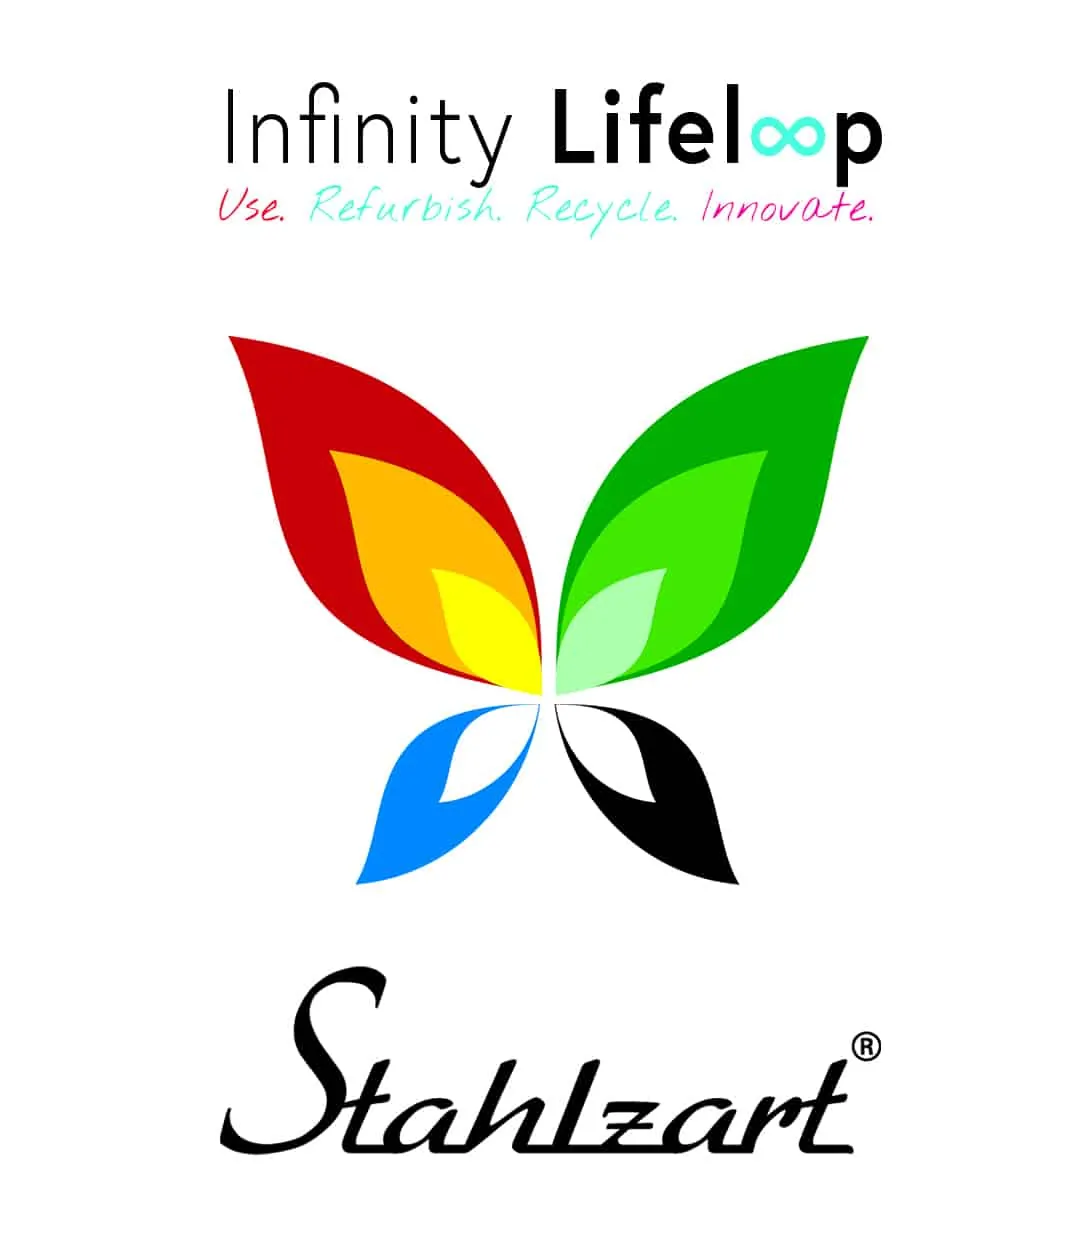 stahlzart-infinity-lifeloop-2020-neu